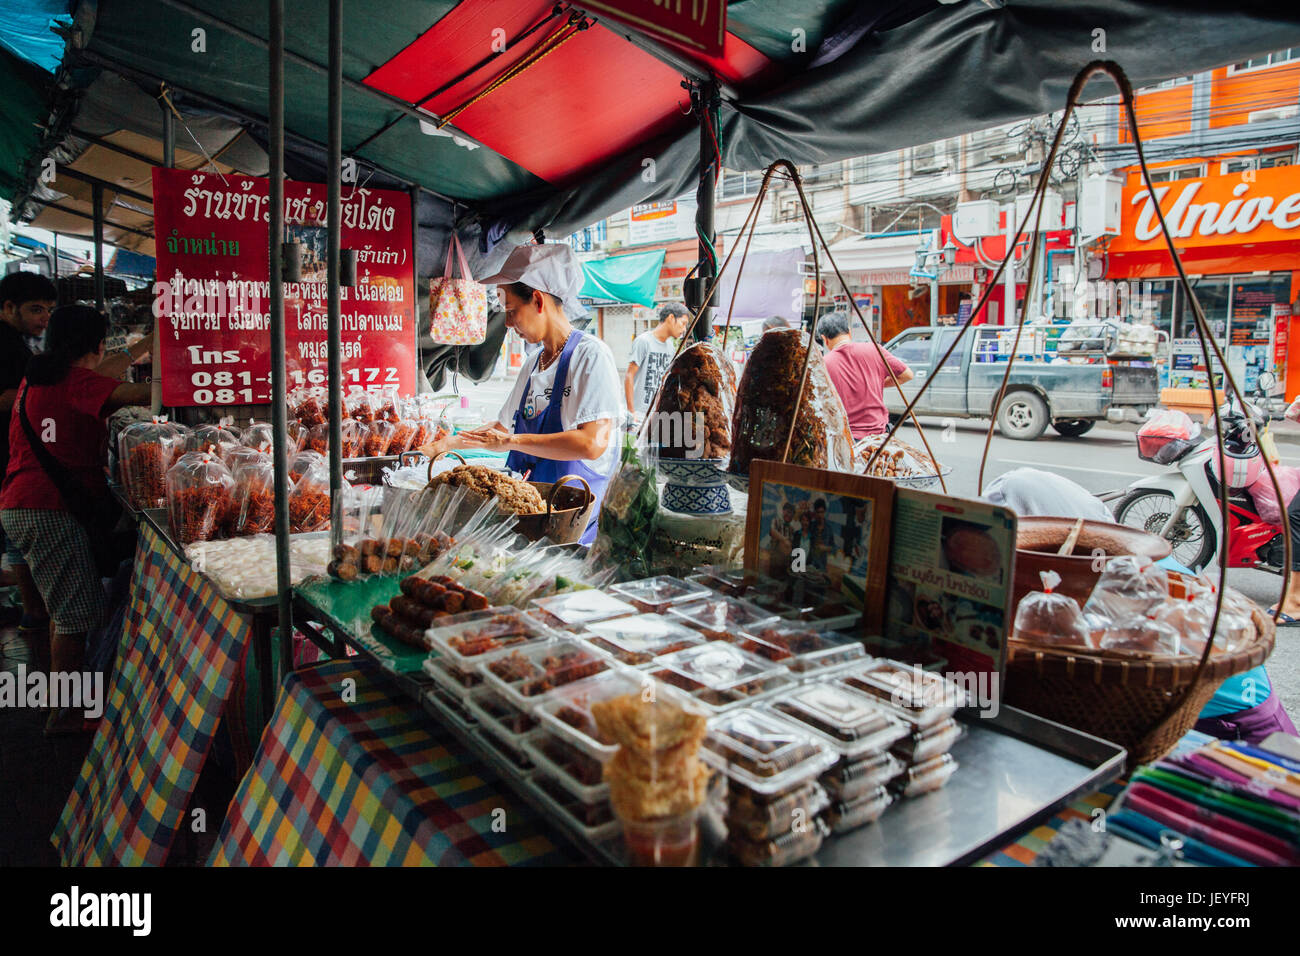 Bangkok, Thaïlande - 11 septembre 2016 : Les vendeurs vendent de la nourriture dans la rue le 11 septembre 2016 à Bangkok, Thaïlande Banque D'Images